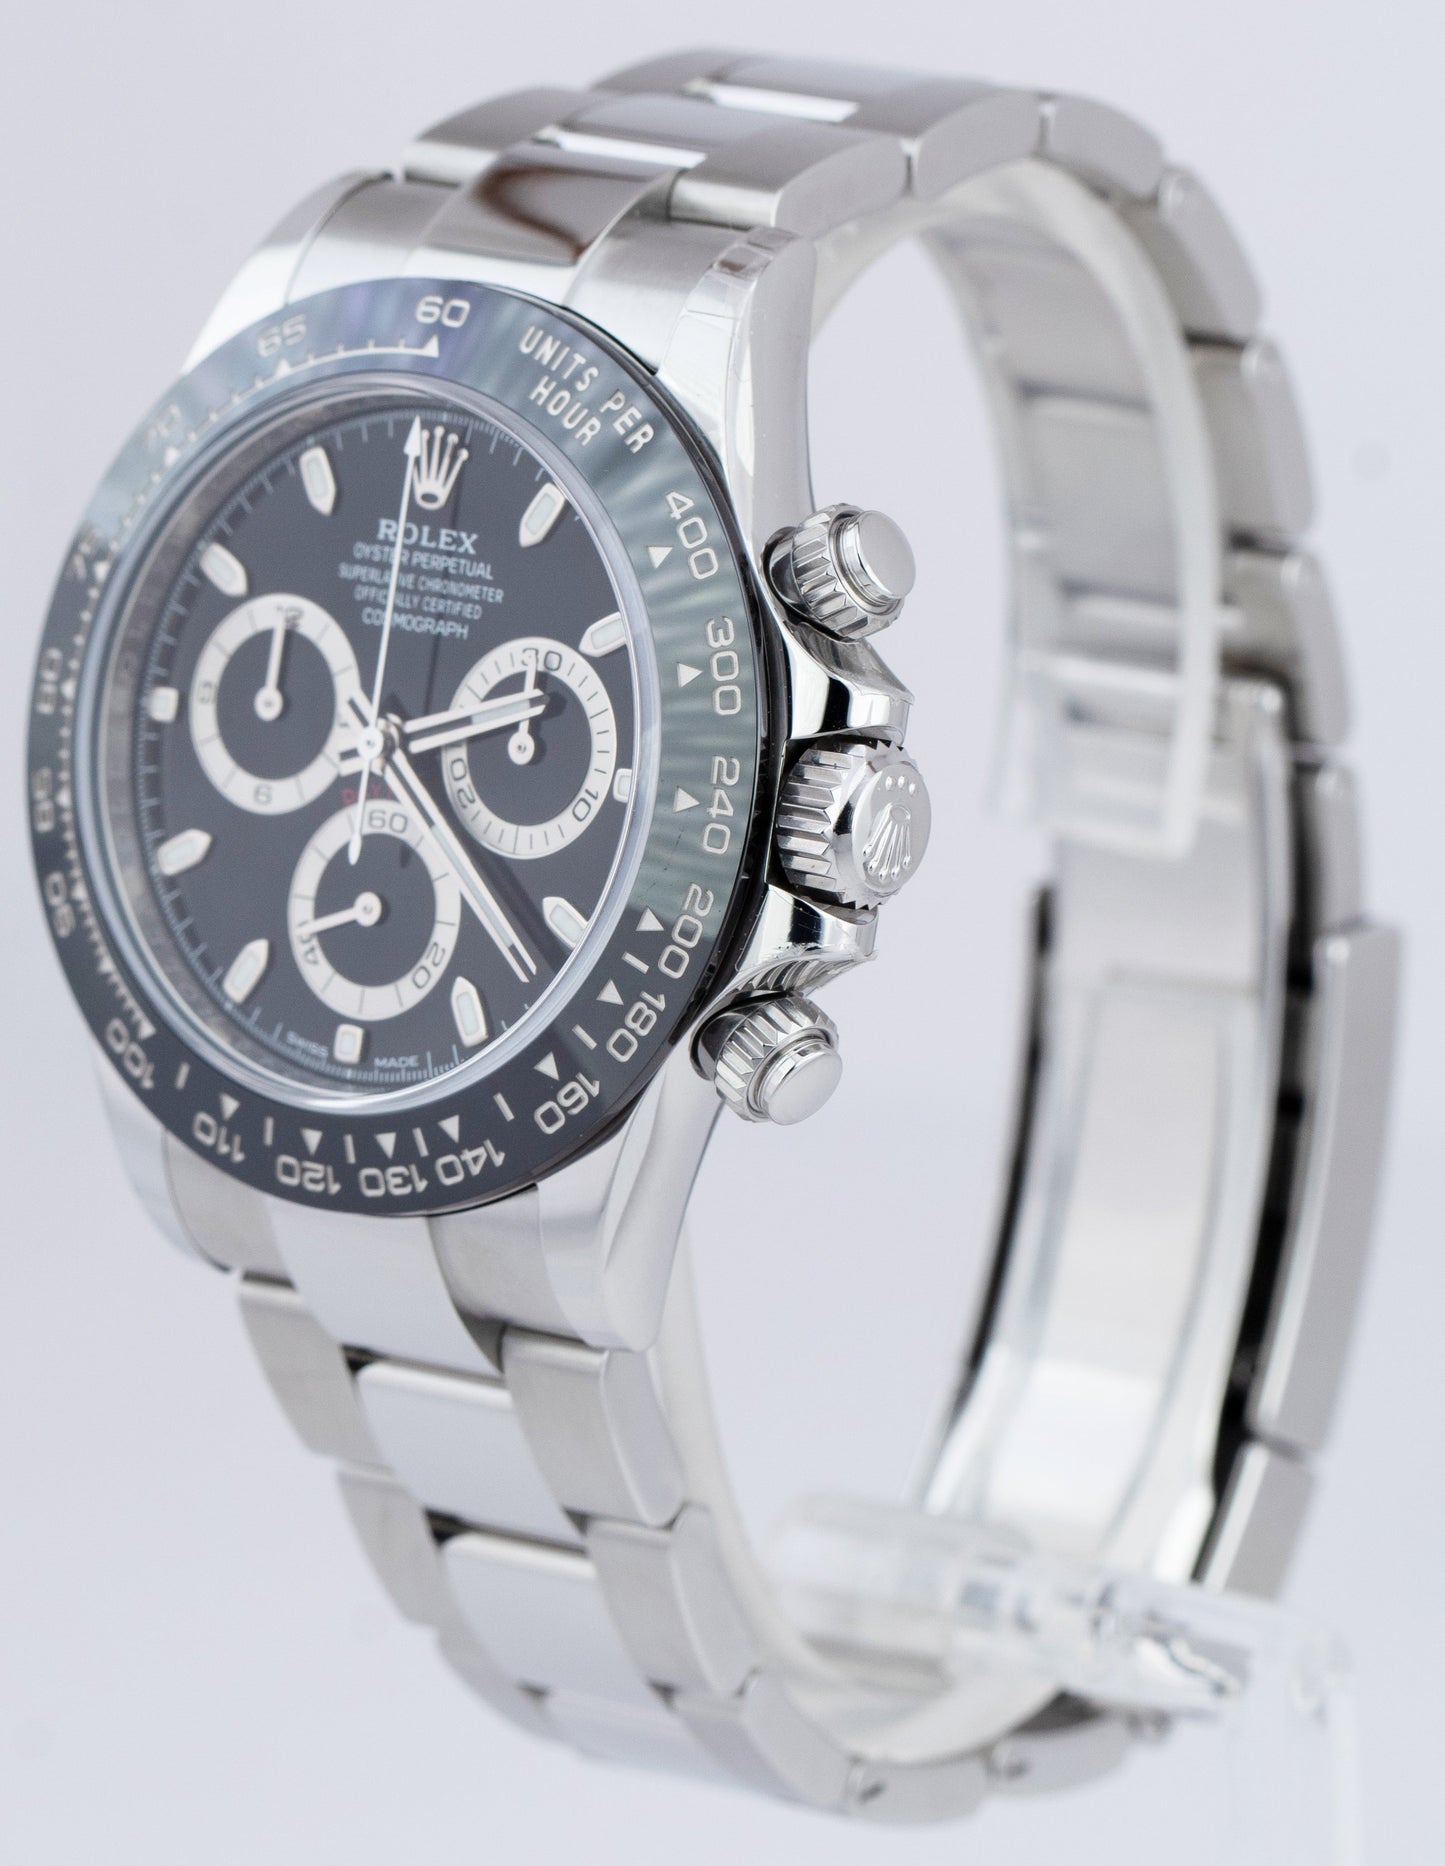 NEW NOV. 2022 Rolex Daytona Cosmograph Black Ceramic Steel 40mm Watch 116500 LN